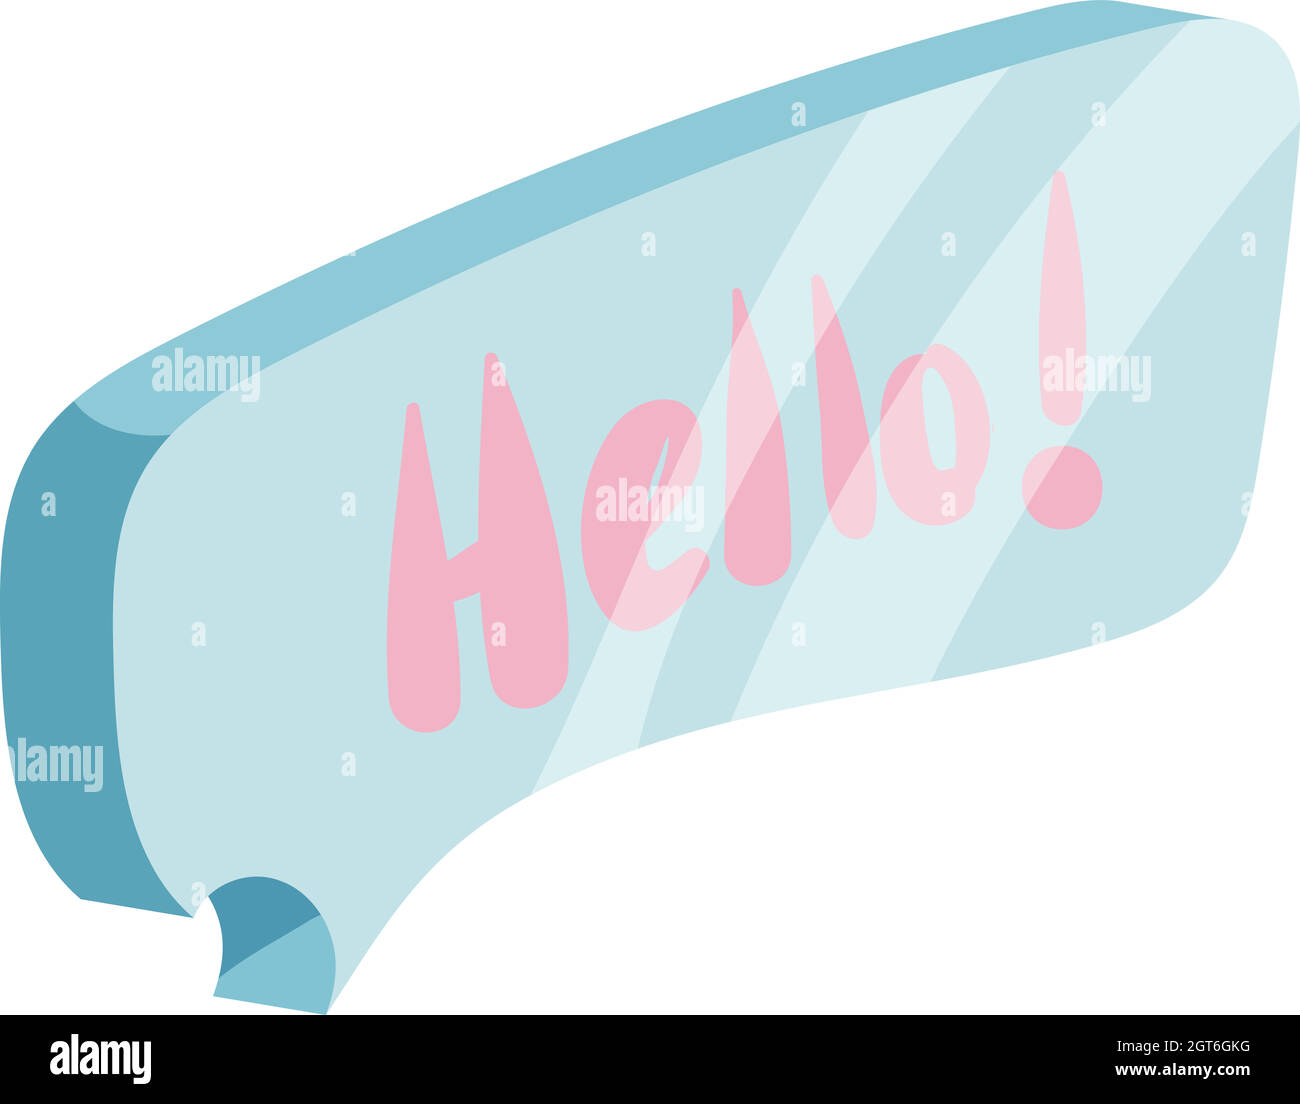 Speech bubble with Hello word icon, cartoon style Stock Vector